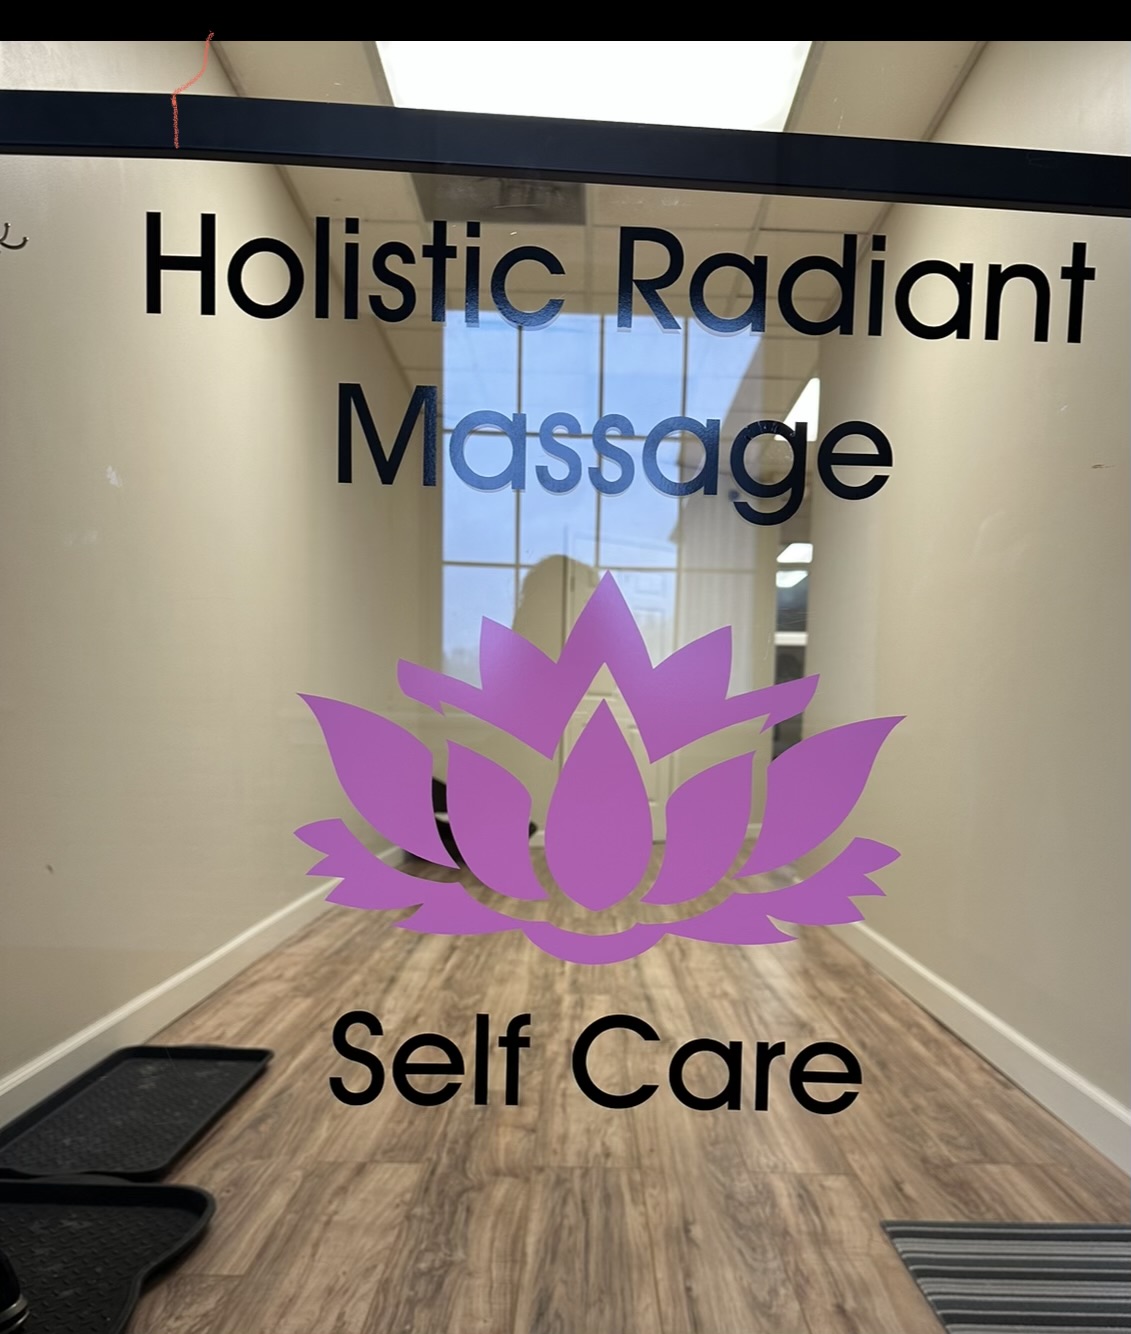 Holistic Radiant Massage & Self Care 587 Main St Suite 202 B, New York Mills New York 13417